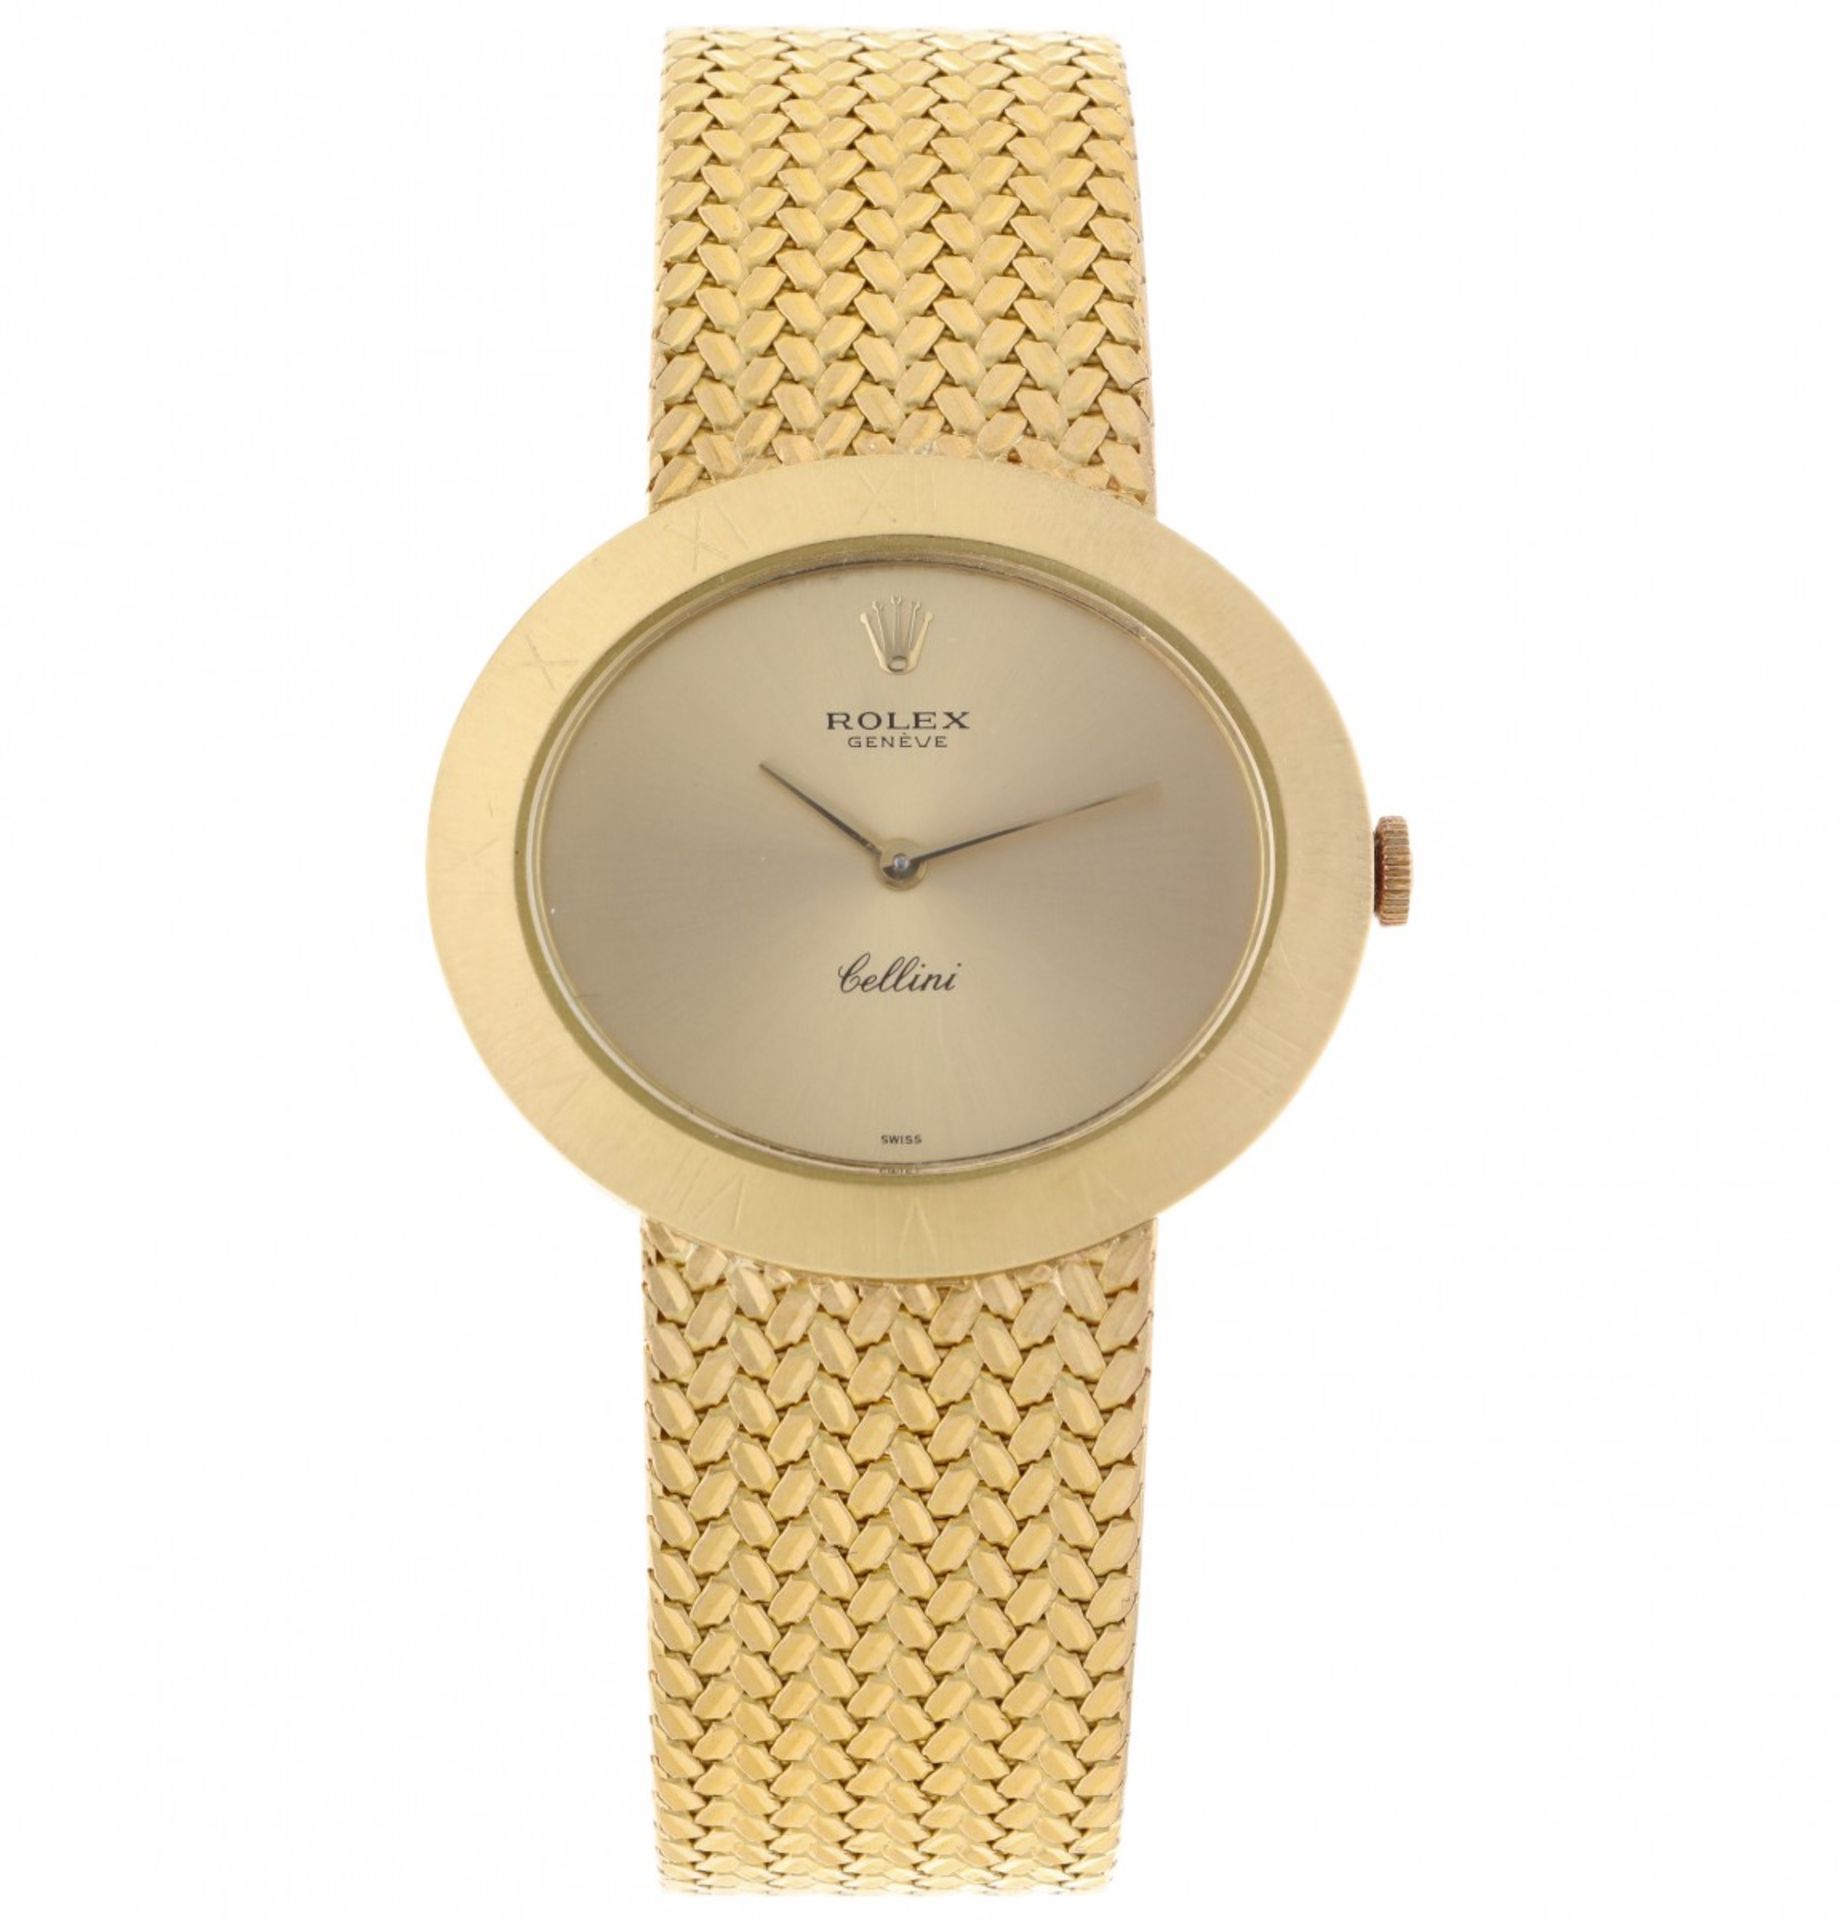 Rolex Cellini 3836 - Men's watch - ca. 1970